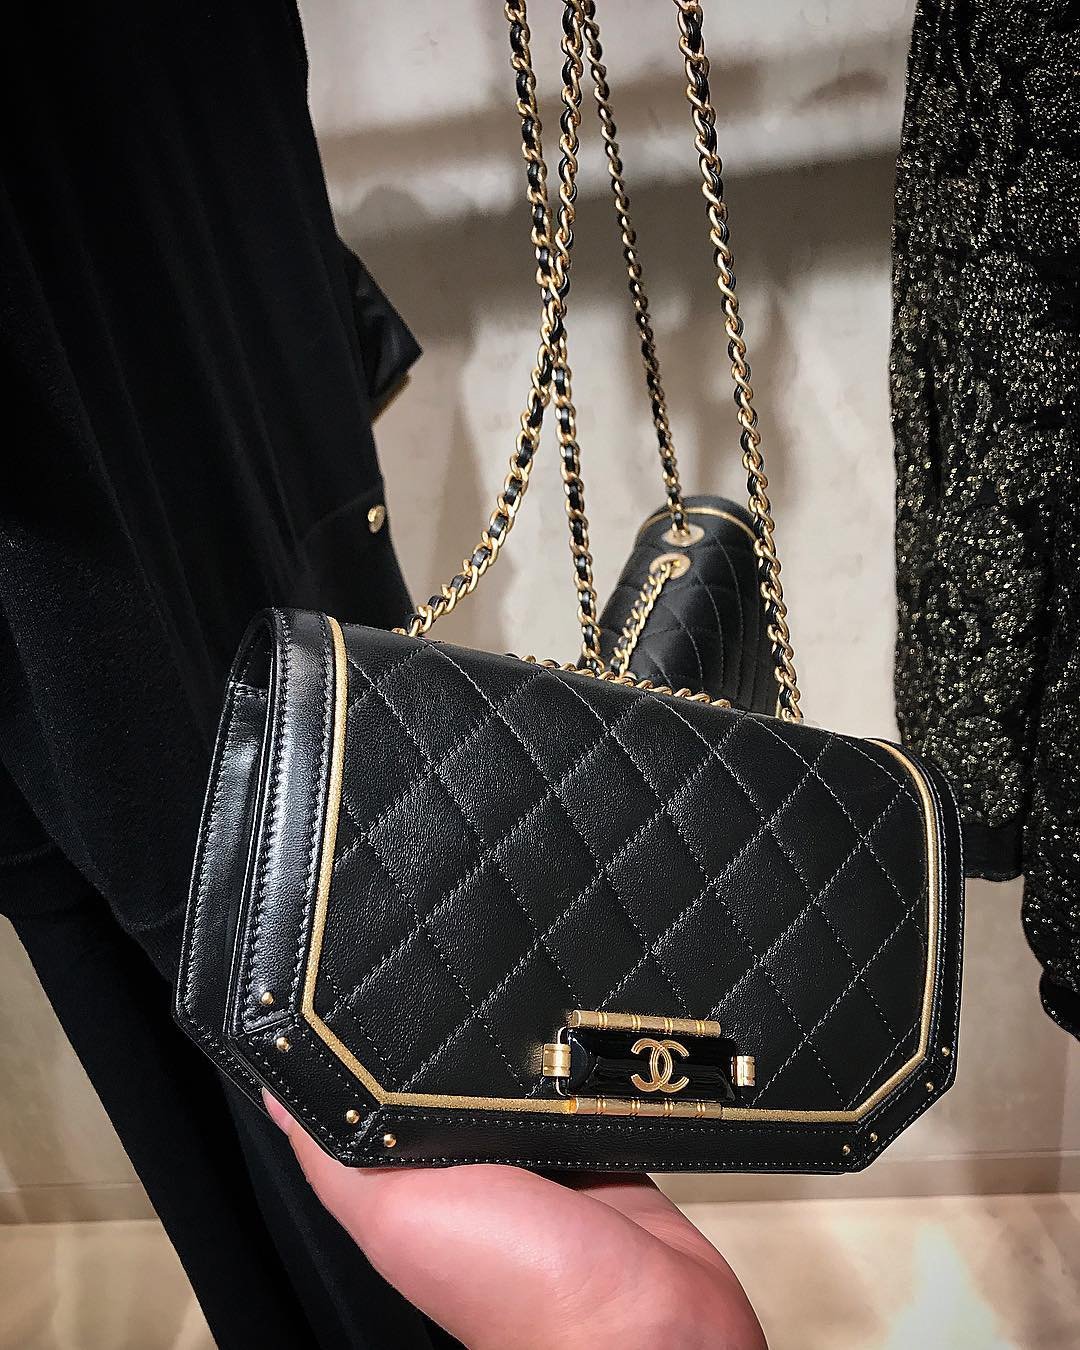 Chanel Twist Chain Enamel CC Flap Bag Quilted Lambskin Large Black 2217693